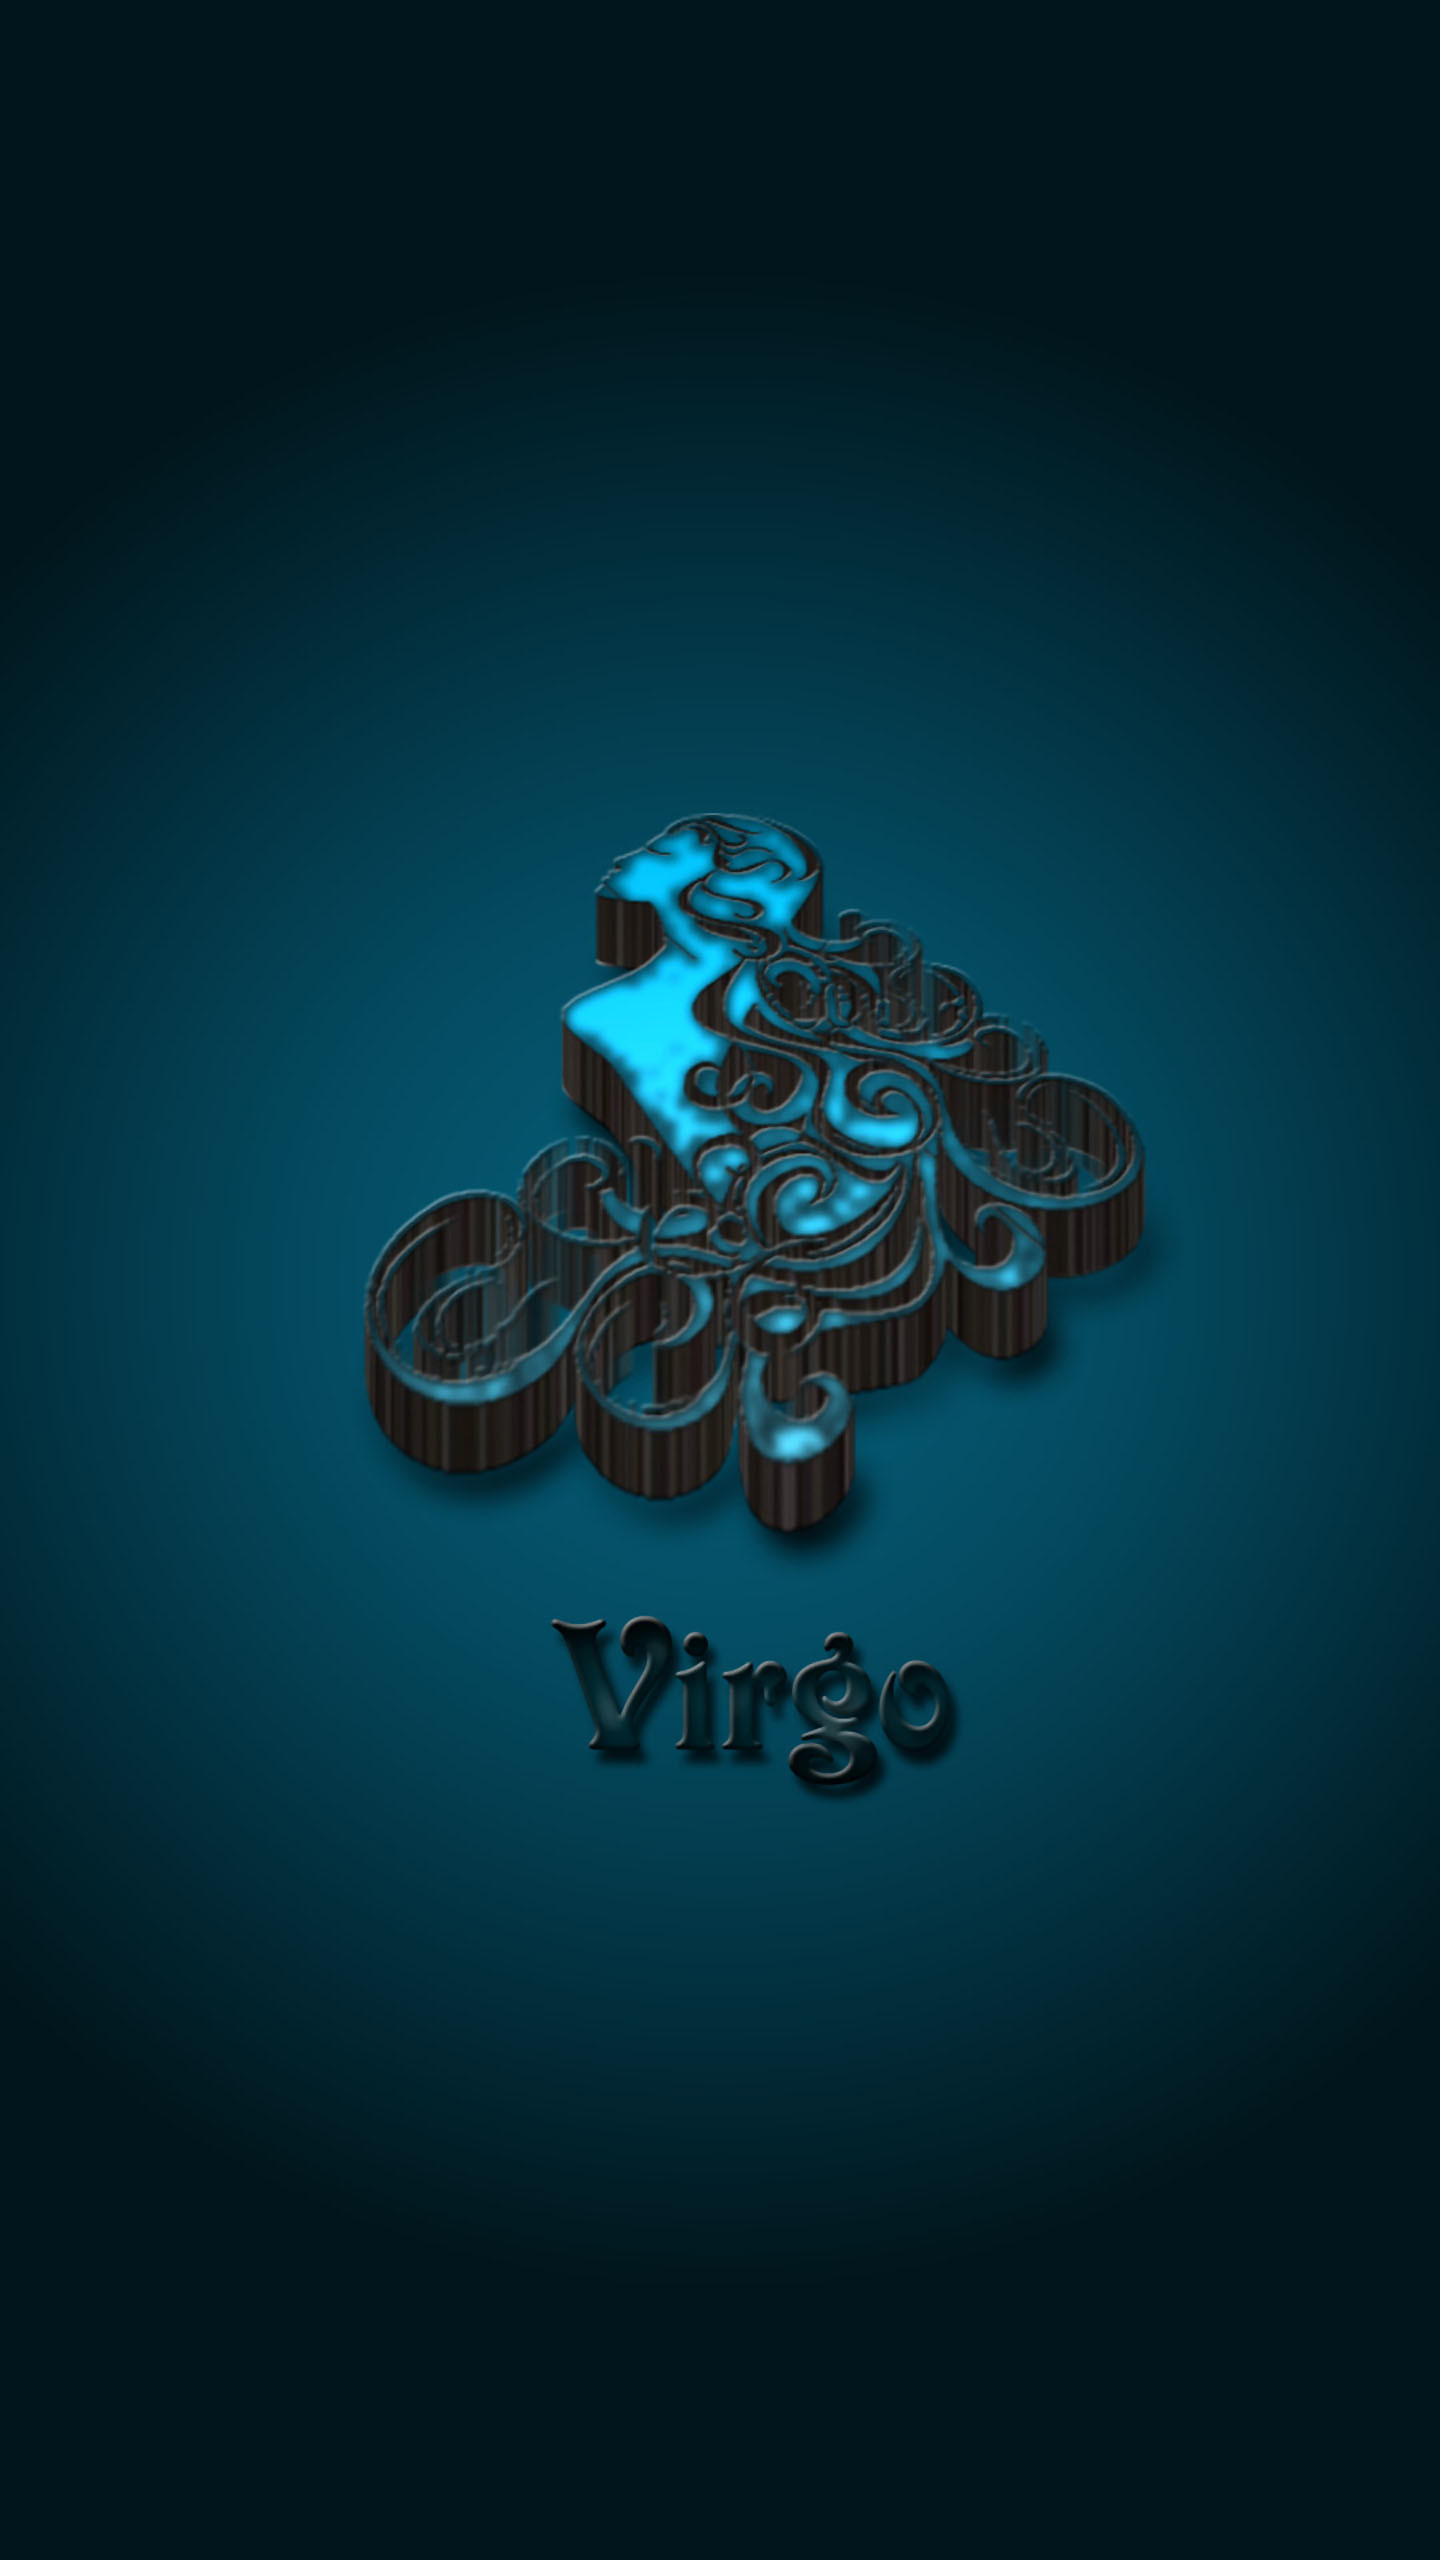 Aesthetic Zodiac Wallpaper Virgo - Largest Wallpaper Portal